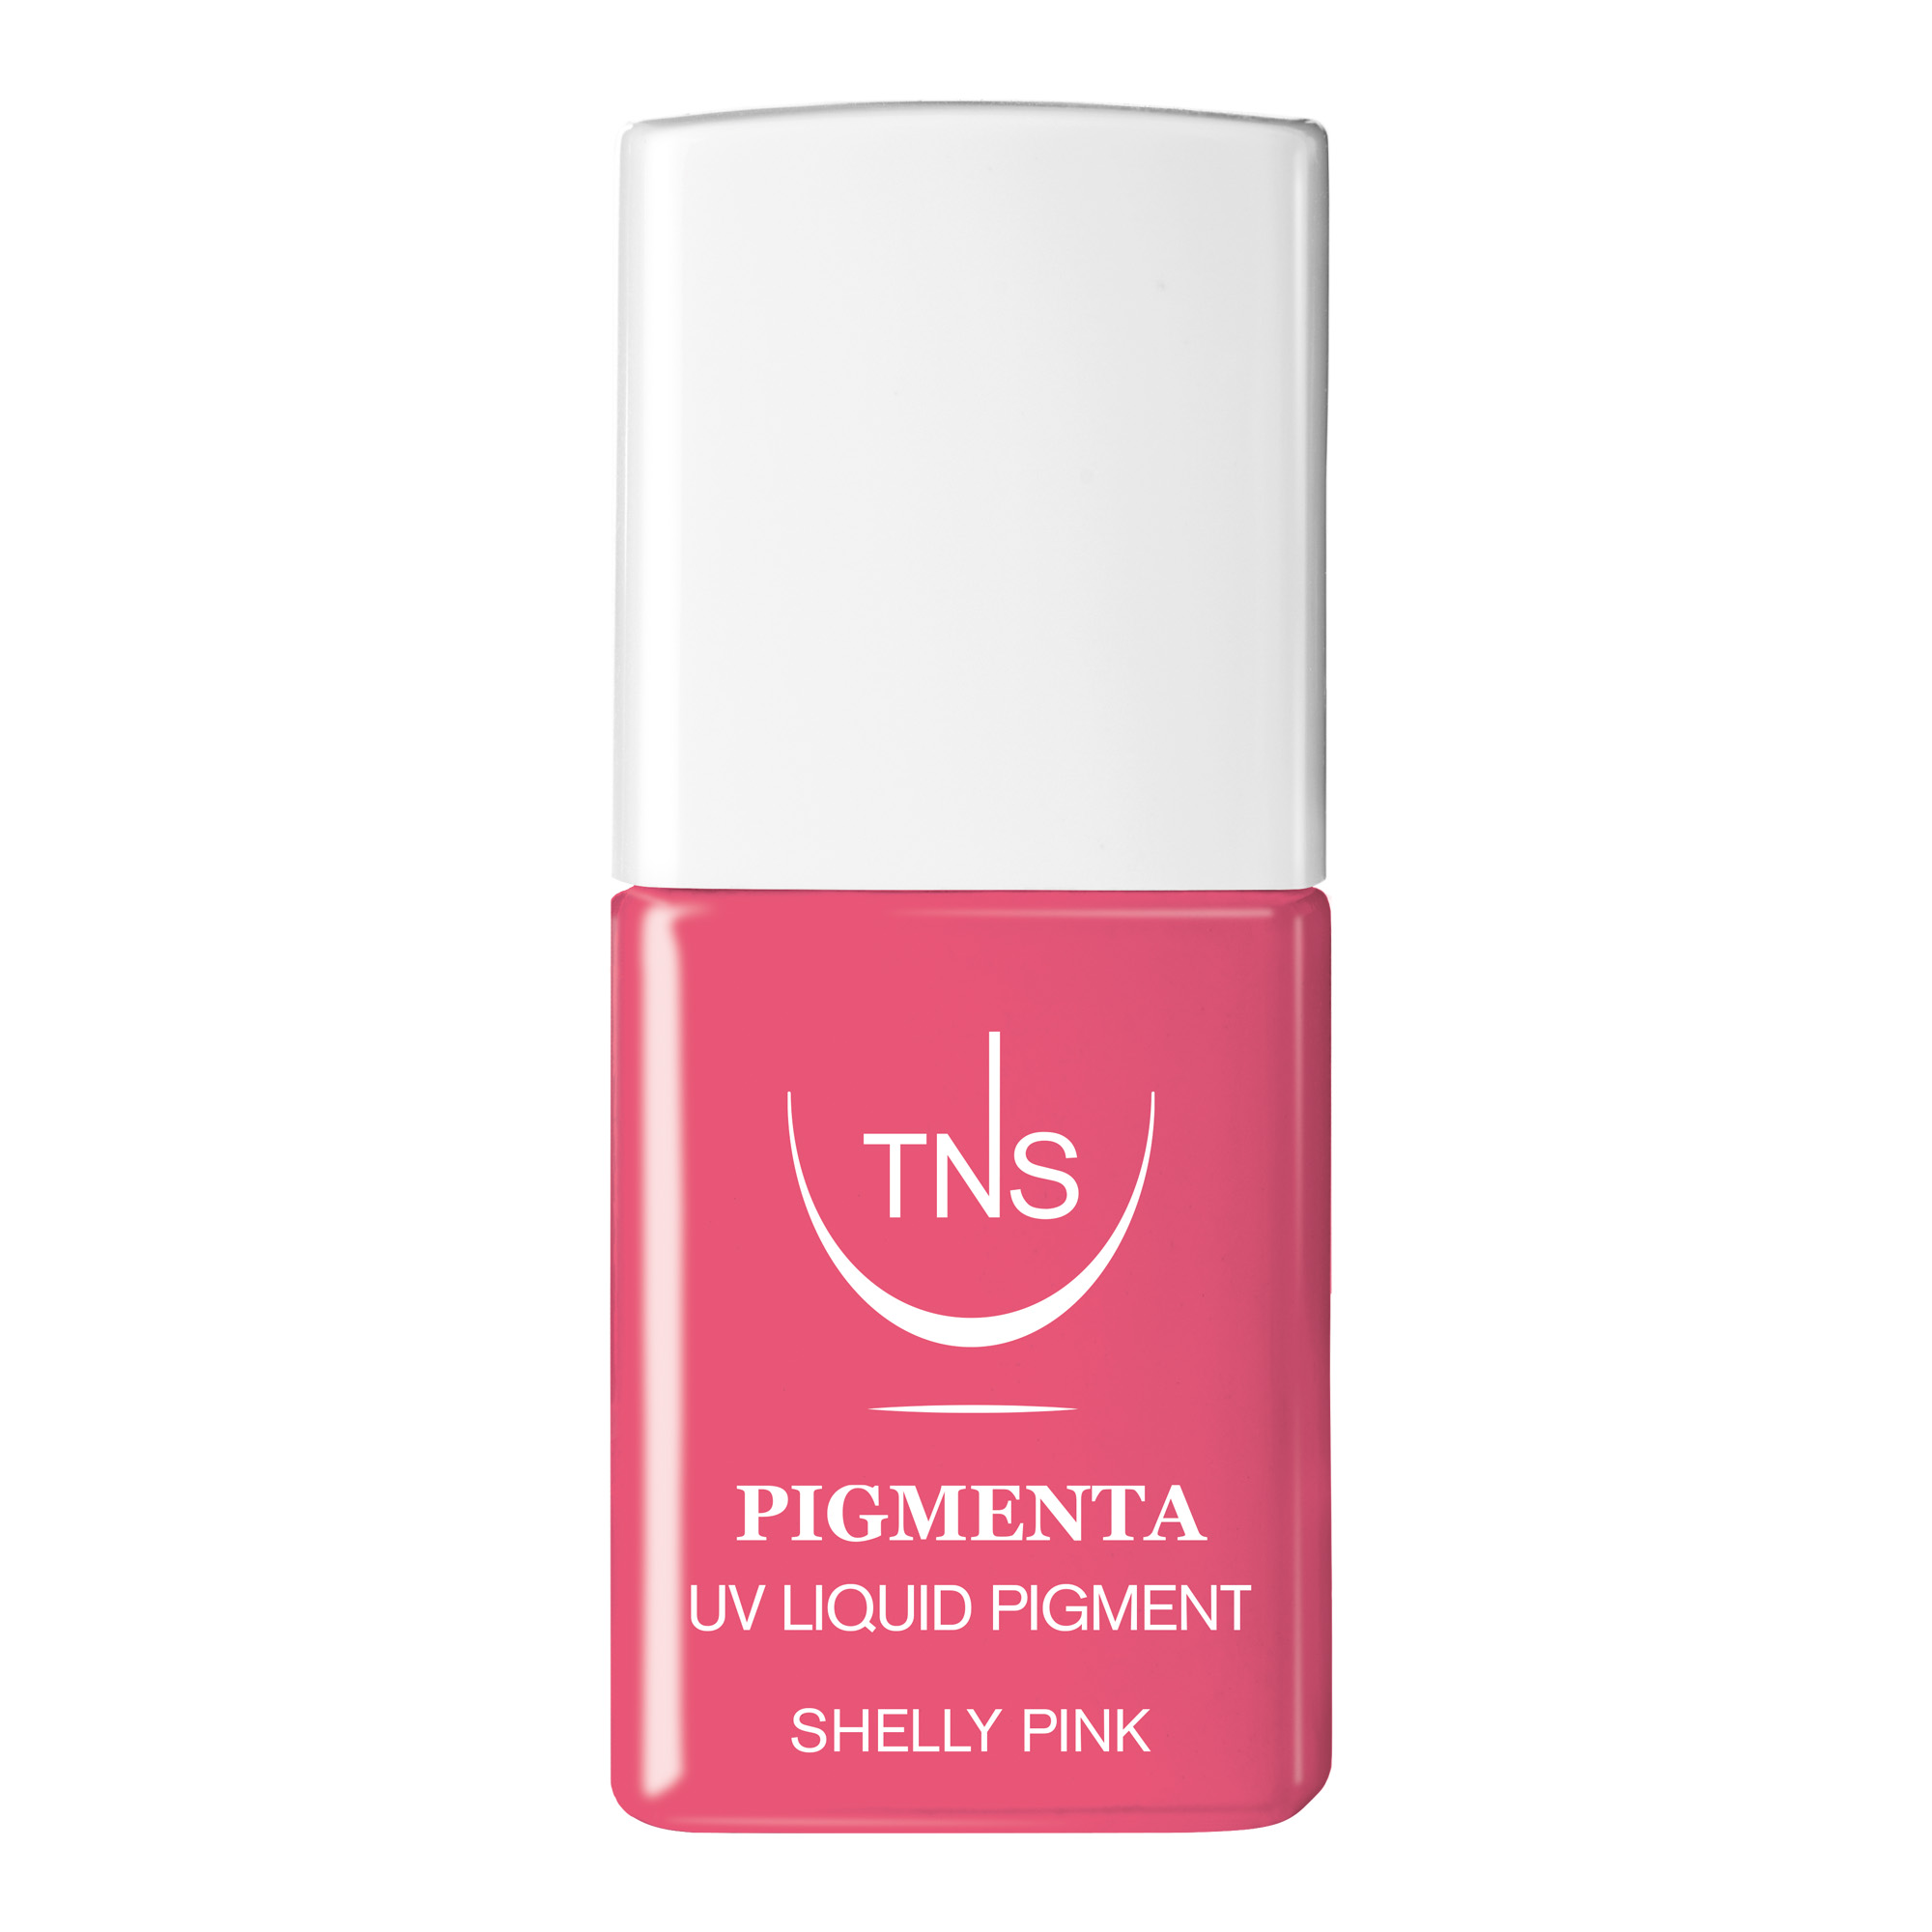 Pigment liquide UV Shelly Pink rose vif 10 ml Pigmenta TNS